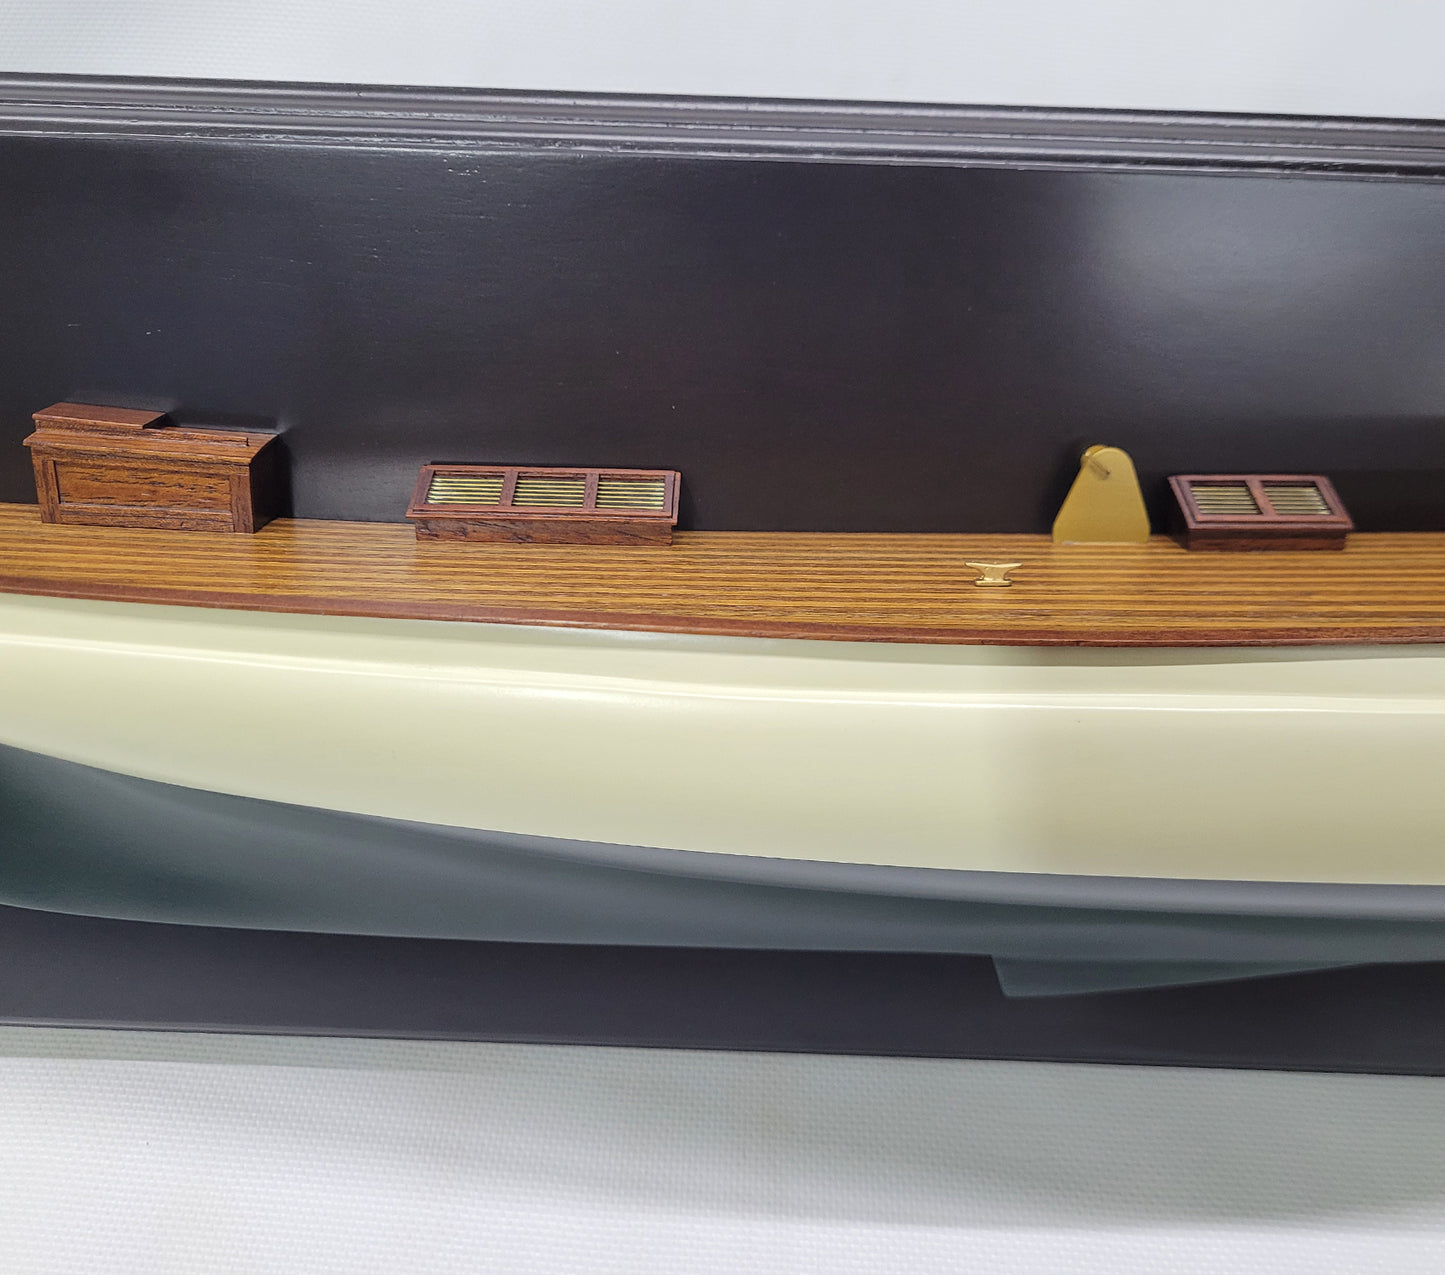 Scale Half Model Of Americas Cup Yacht "Puritan" - Lannan Gallery